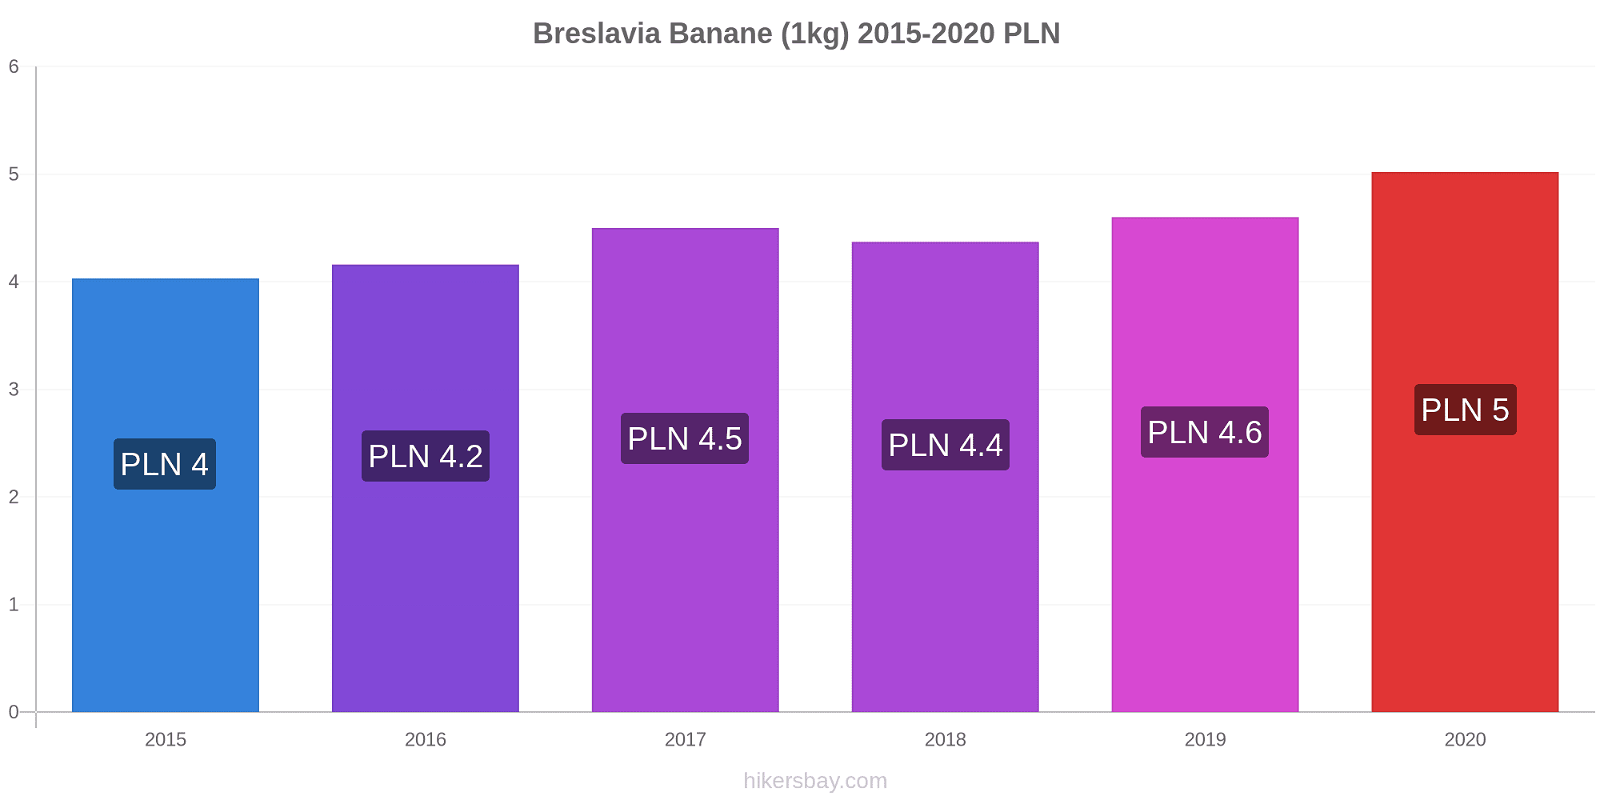 Breslavia variazioni di prezzo Banana (1kg) hikersbay.com